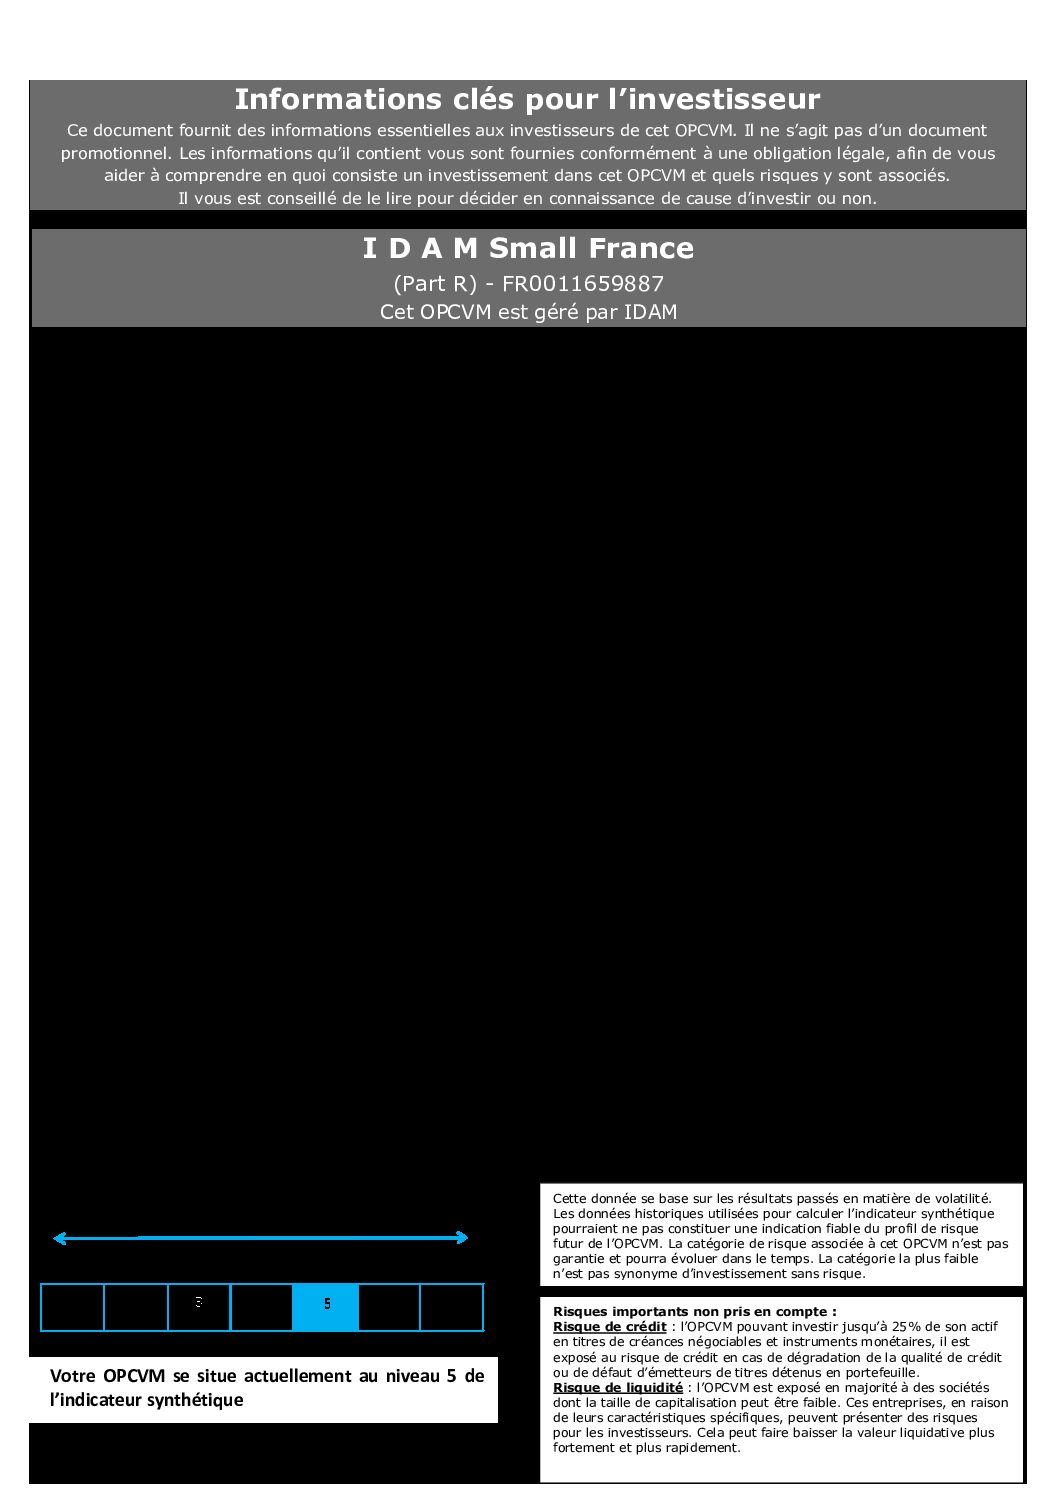 Prospectus-Complet-IDAM-Small-France-002-pdf